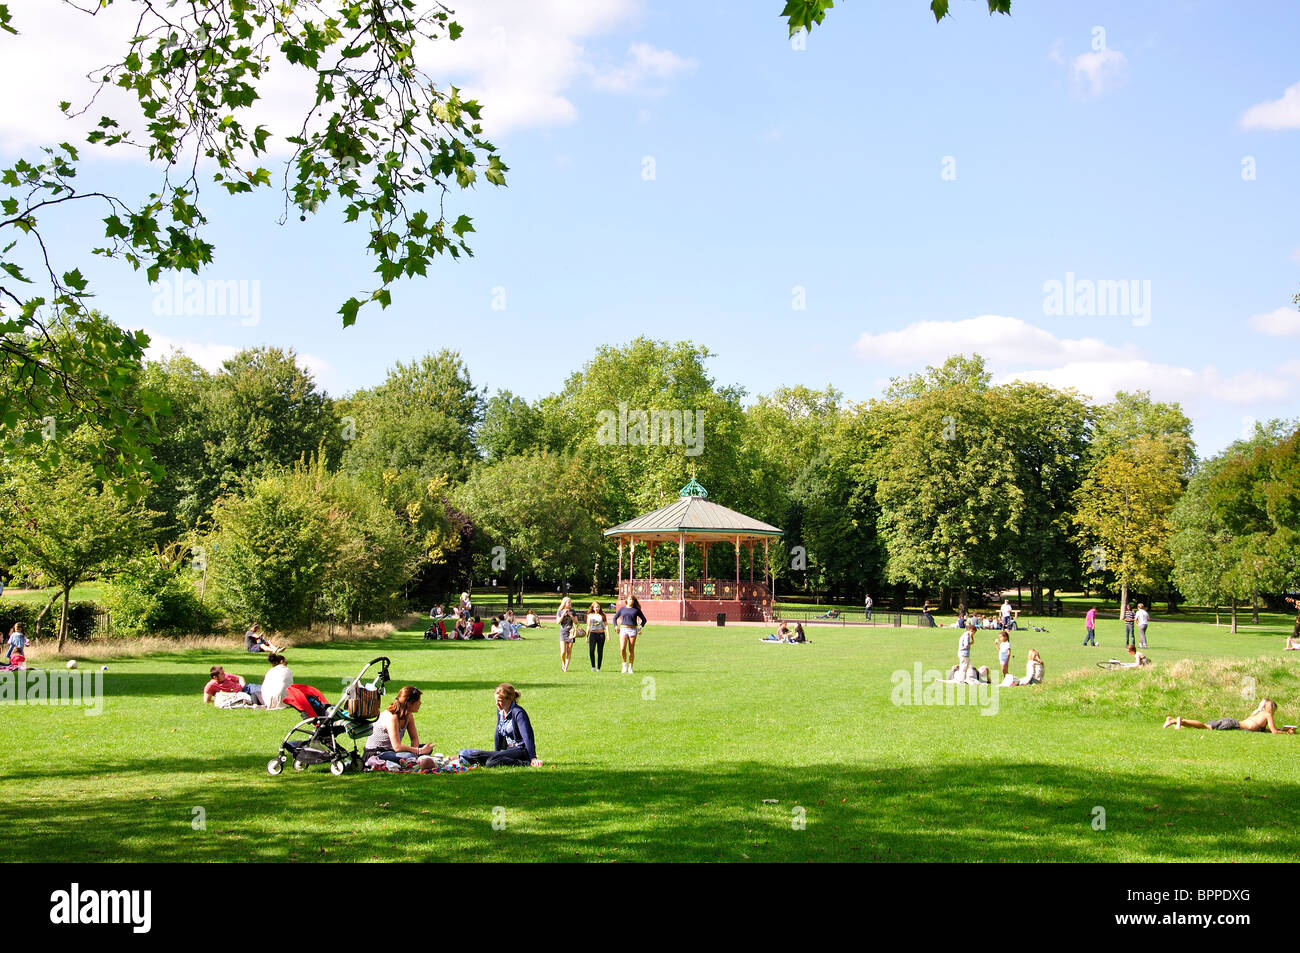 Il bandstand, Queen's Park, London Borough of Brent, Greater London, England, Regno Unito Foto Stock